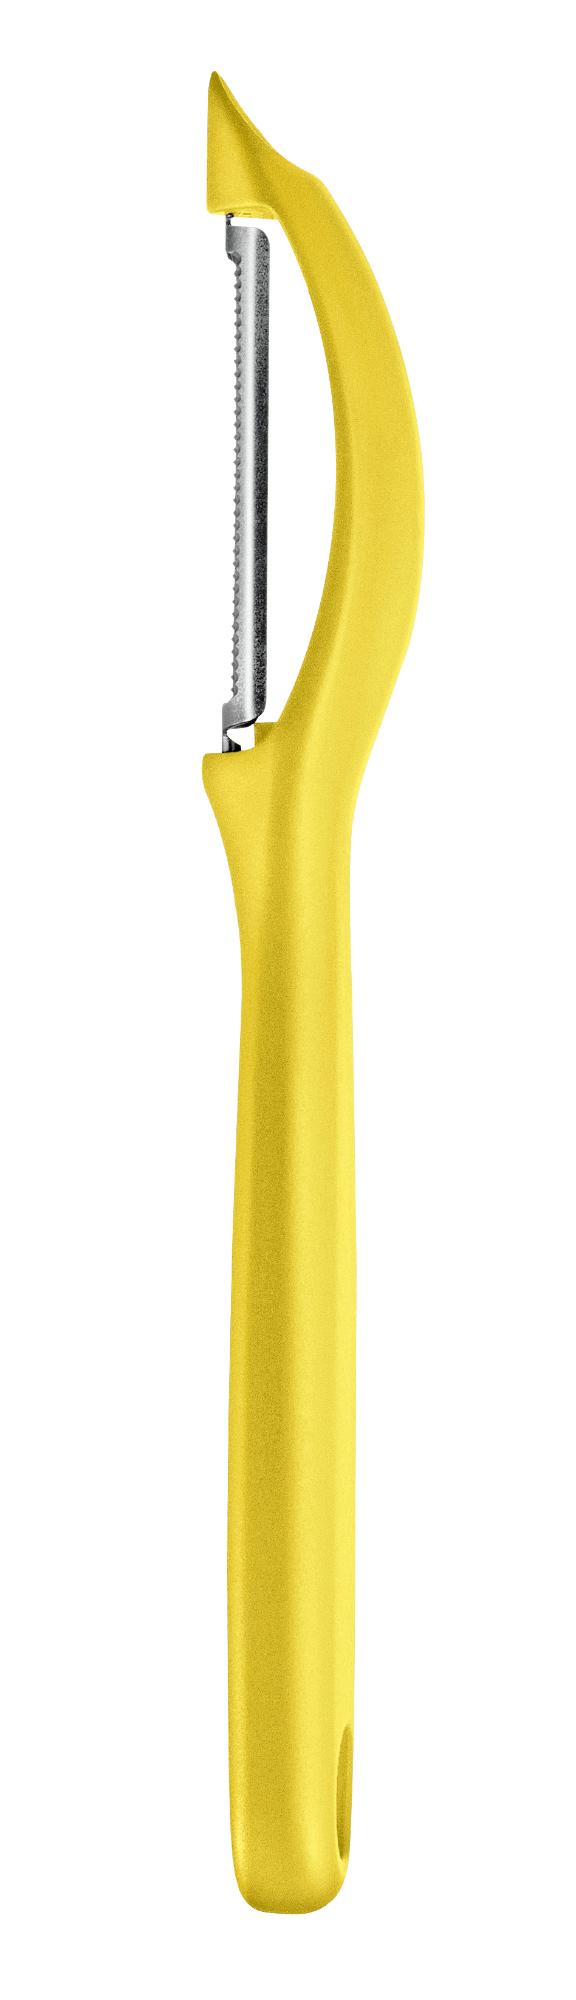 Swiss Classic universal peeler, serrated blade - yellow